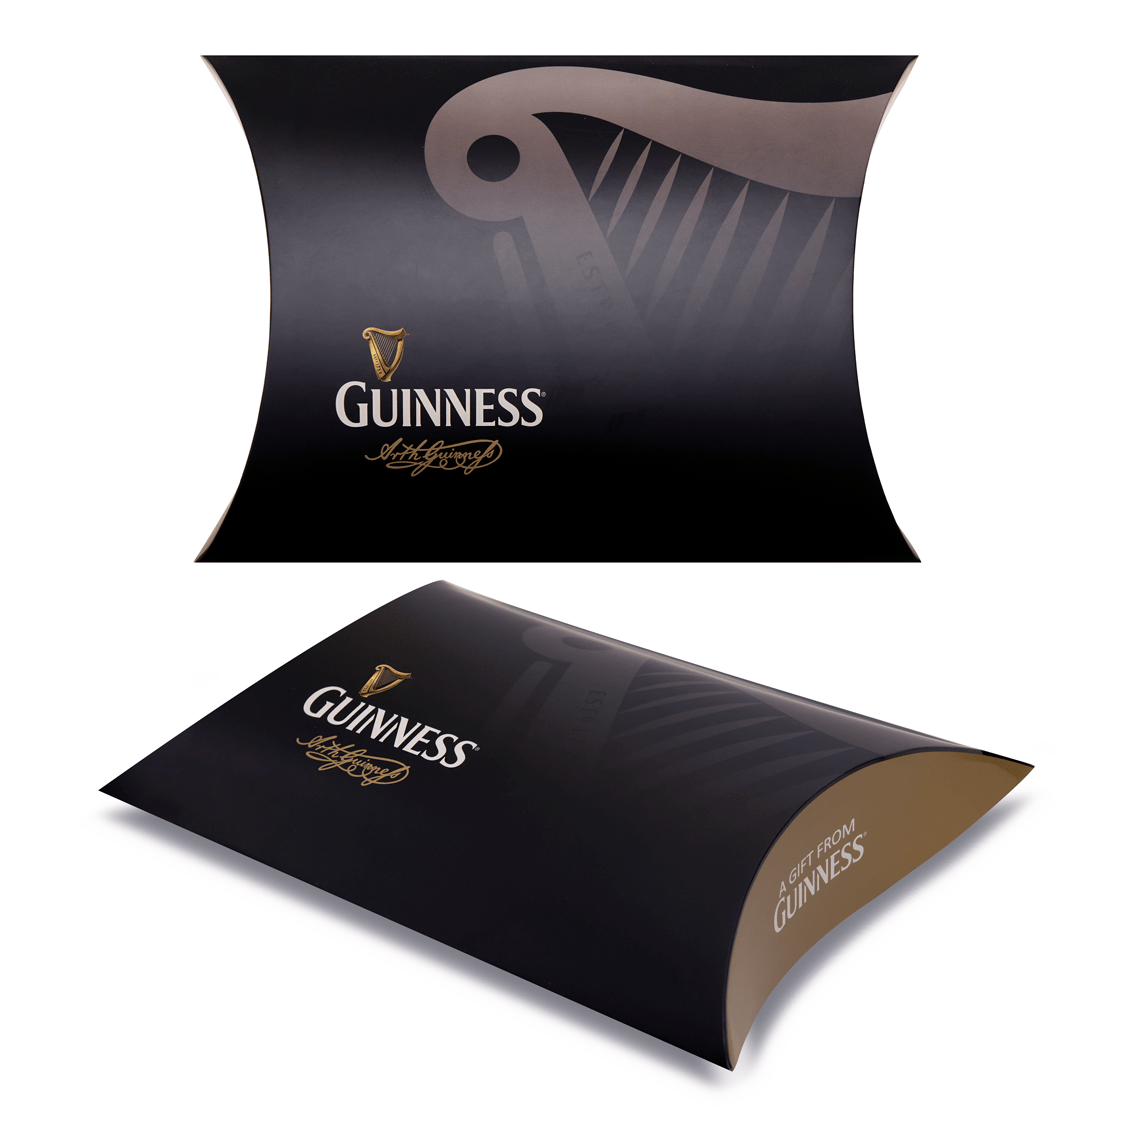 Guinness Ultimate Toucan Home Bar Pack packaging design, merchandise